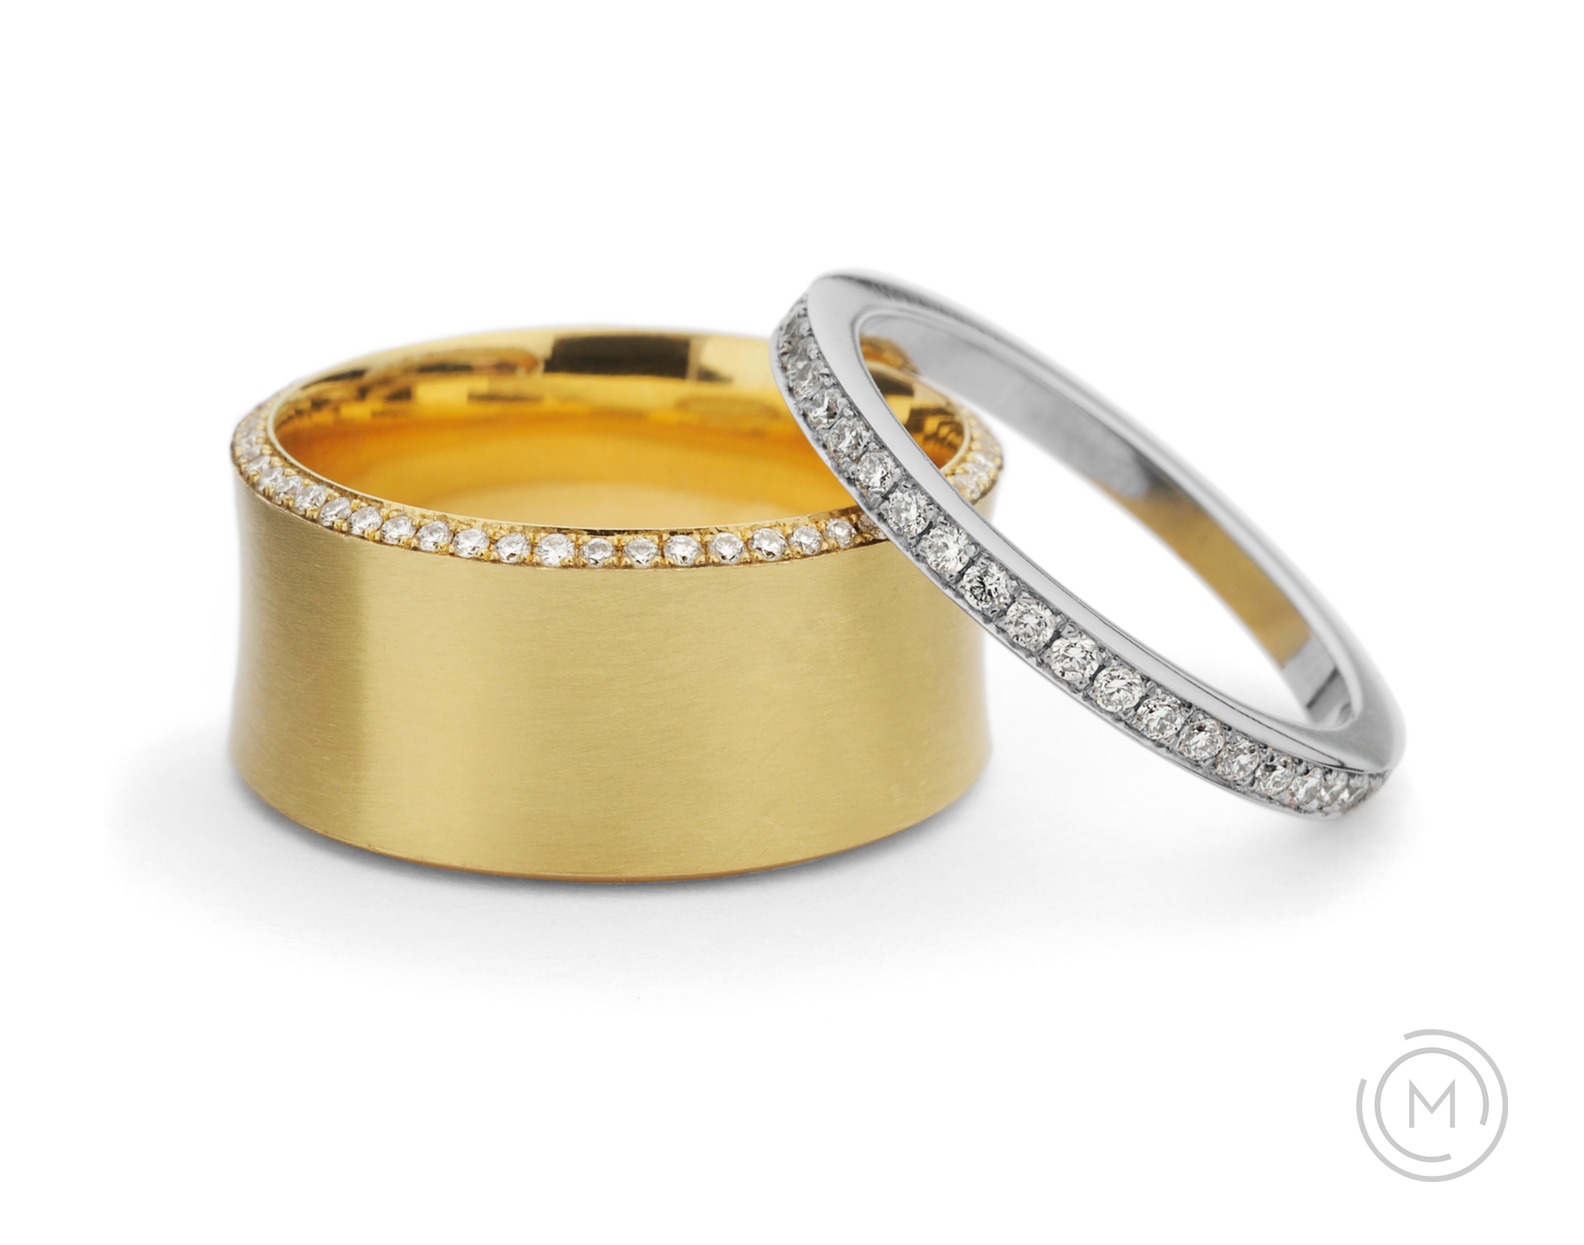 Yellow gold and platinum diamond wedding rings